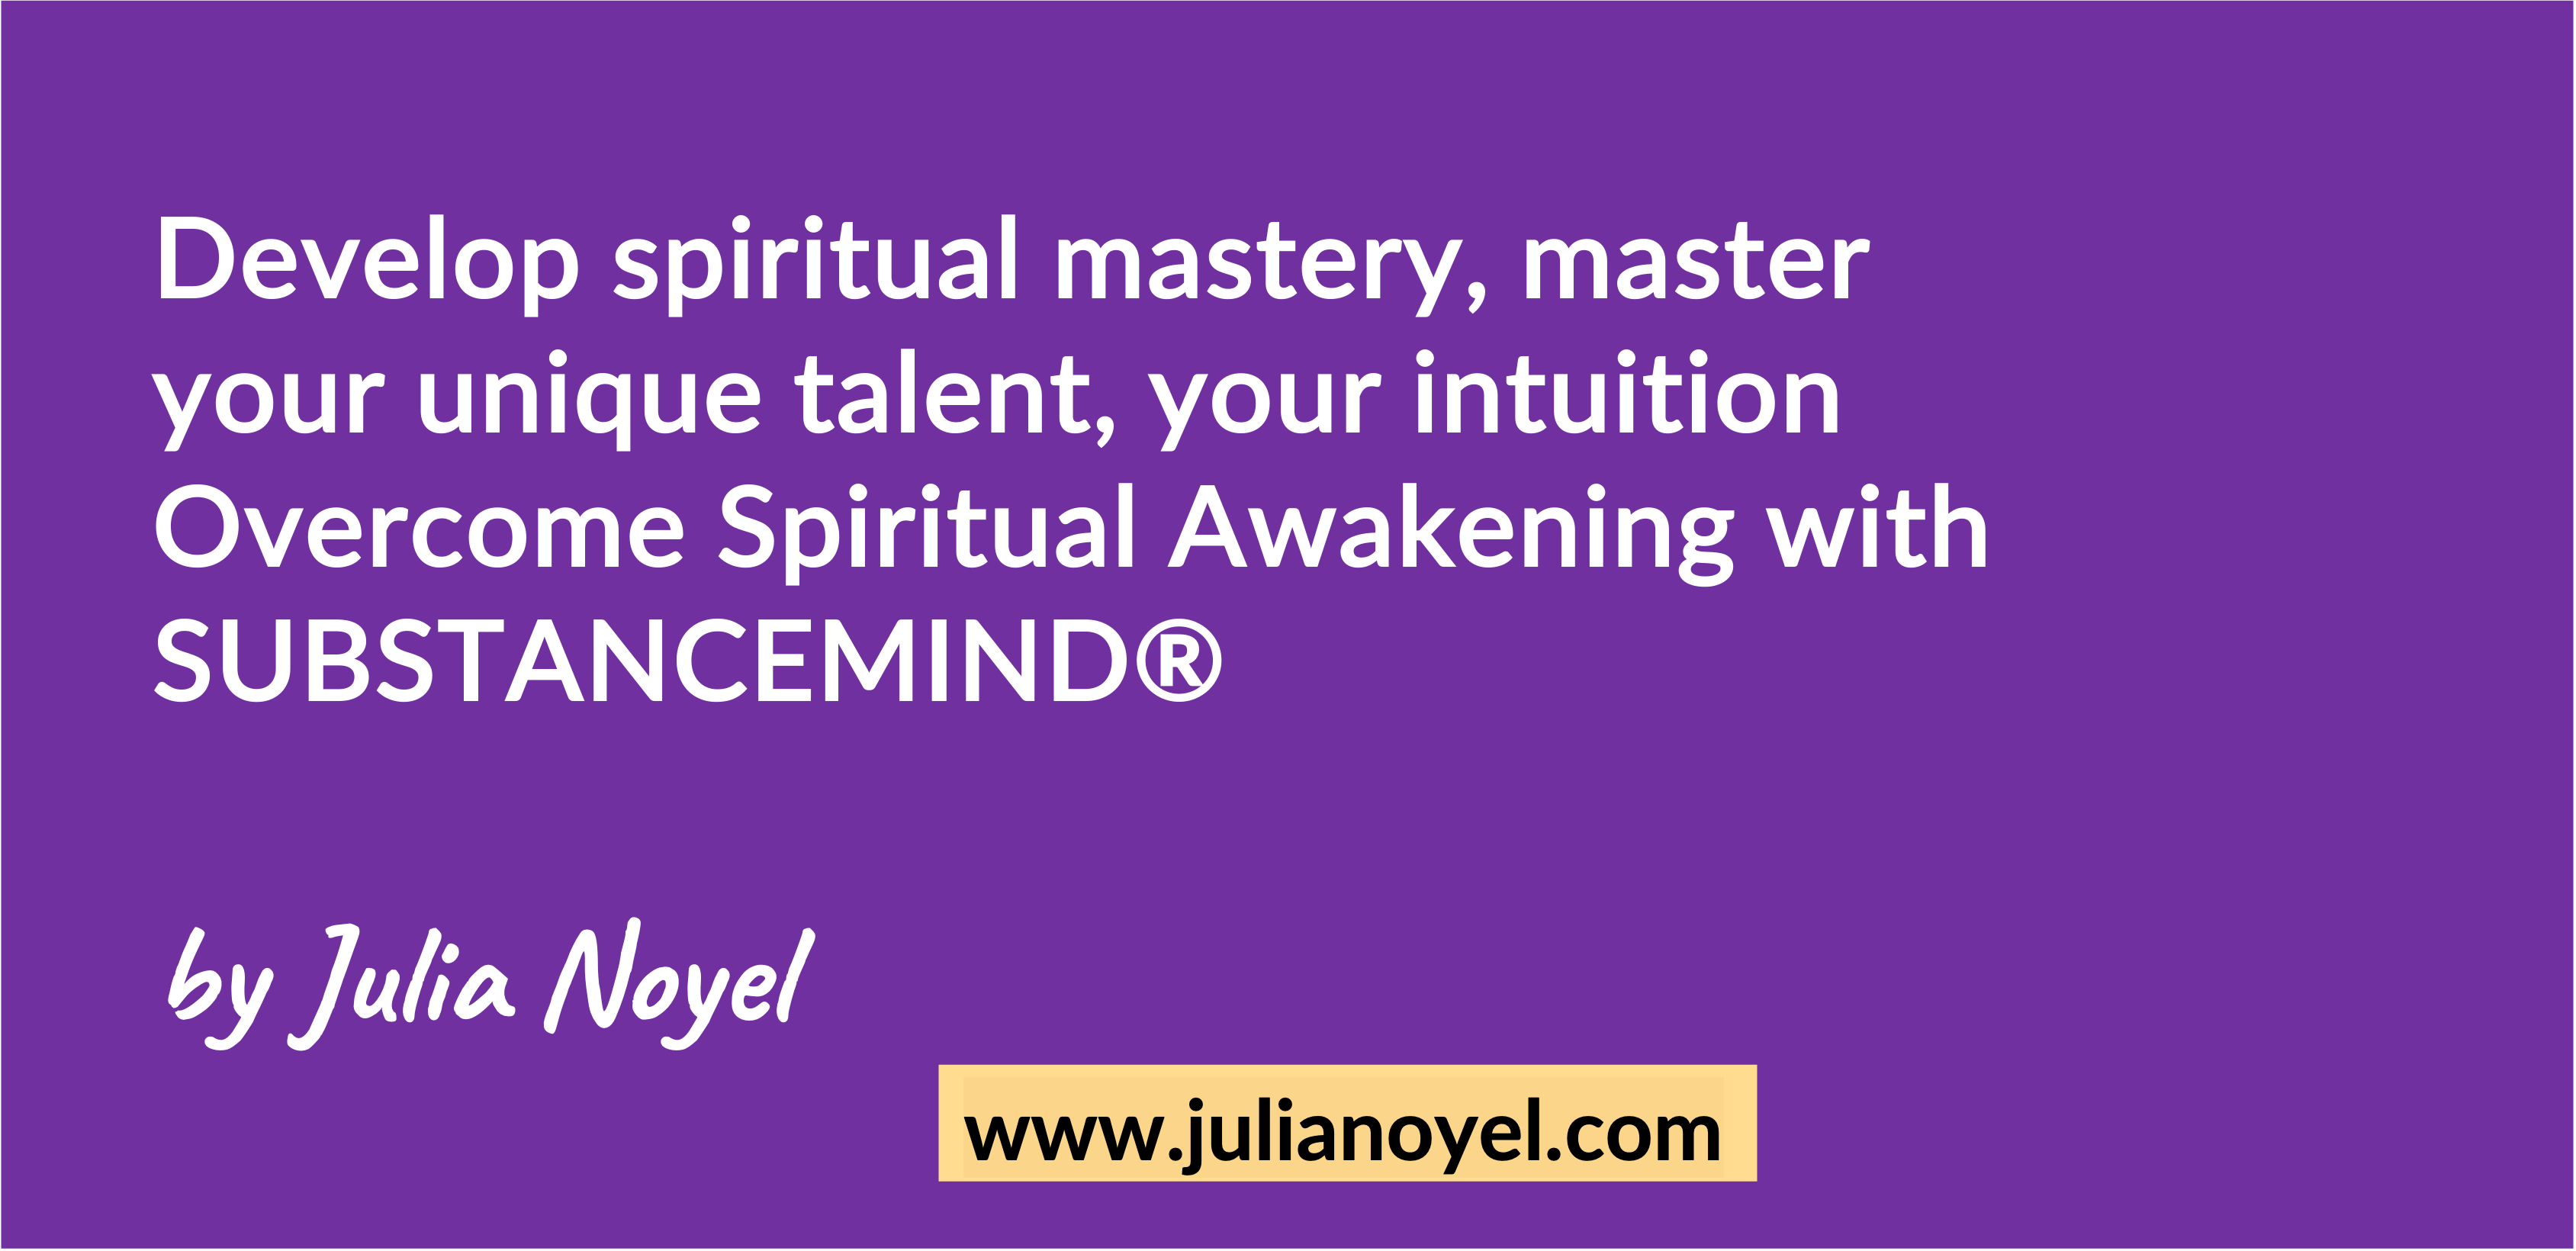 Develop spiritual mastery, master your unique talent, your intuitionOvercome Spiritual Awakening with SUBSTANCEMIND®